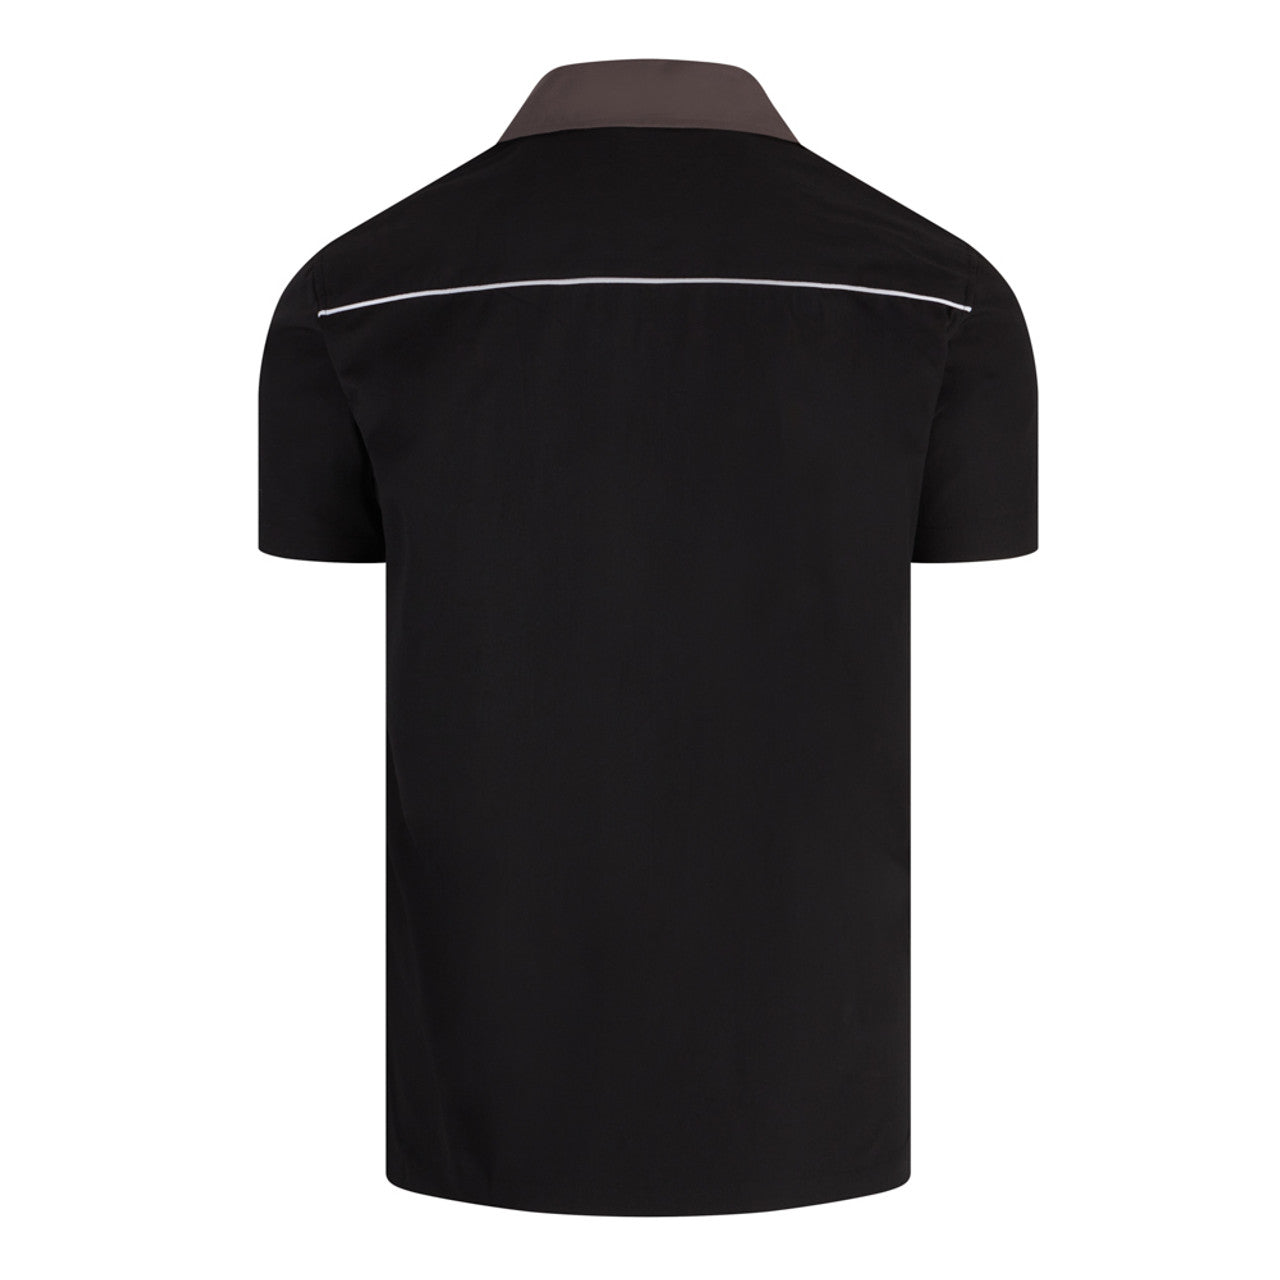 Relco Rockabilly Retro Charcoal/Black Bowling Shirt